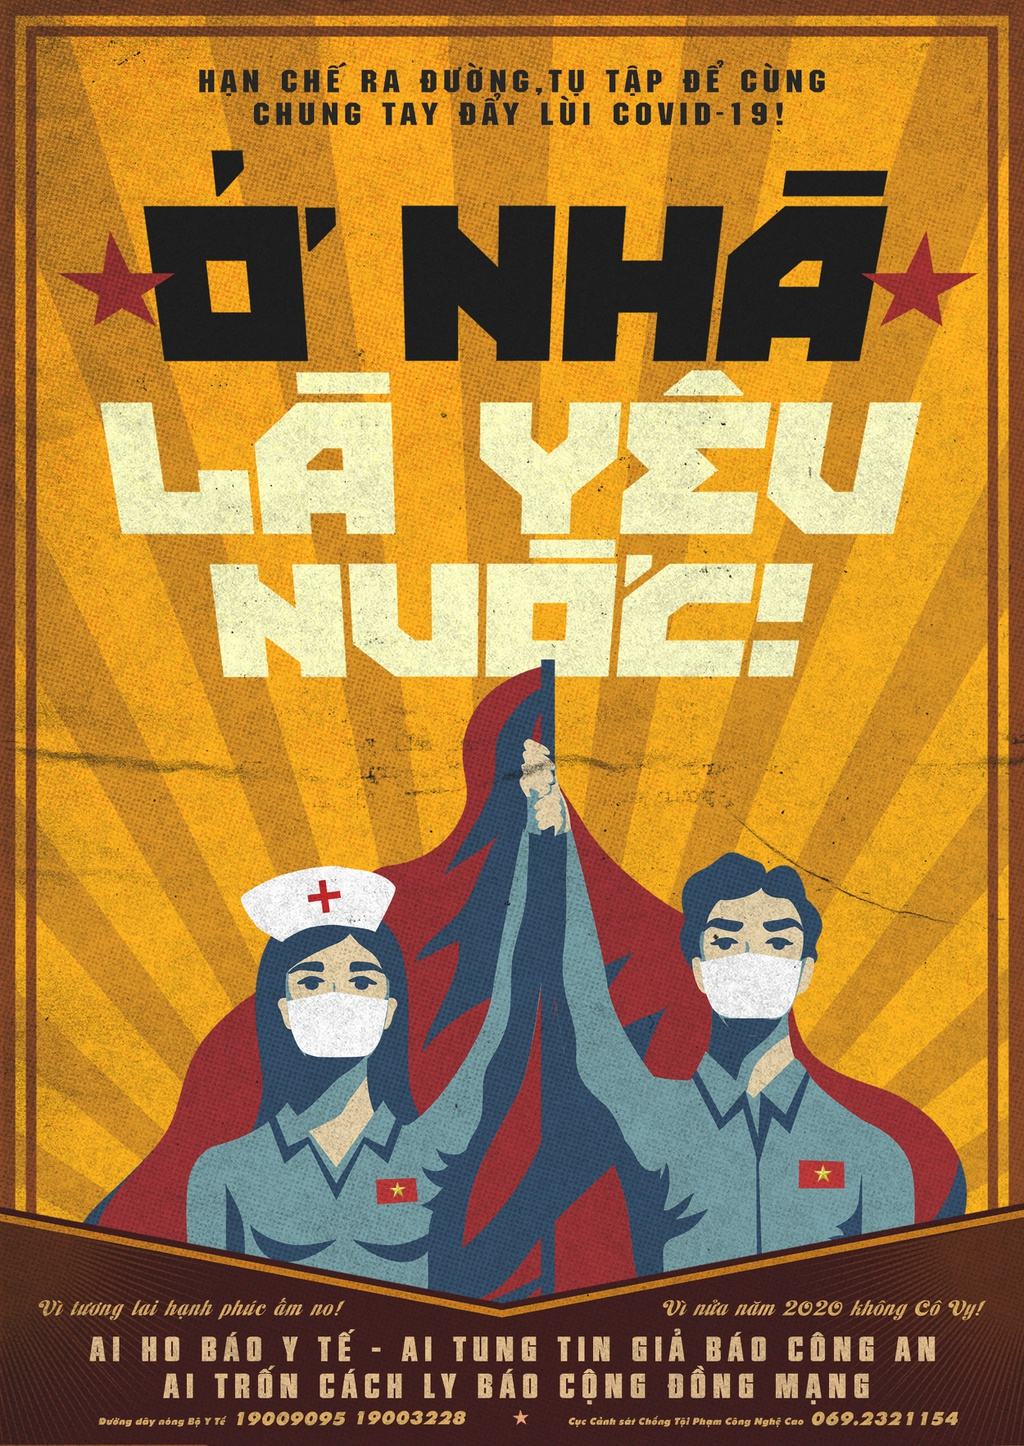 Ban poster co dong ‘O nha la yeu nuoc’ de mua gao tang nguoi ngheo hinh anh 2 Propaganda_COVID19_f_.jpg